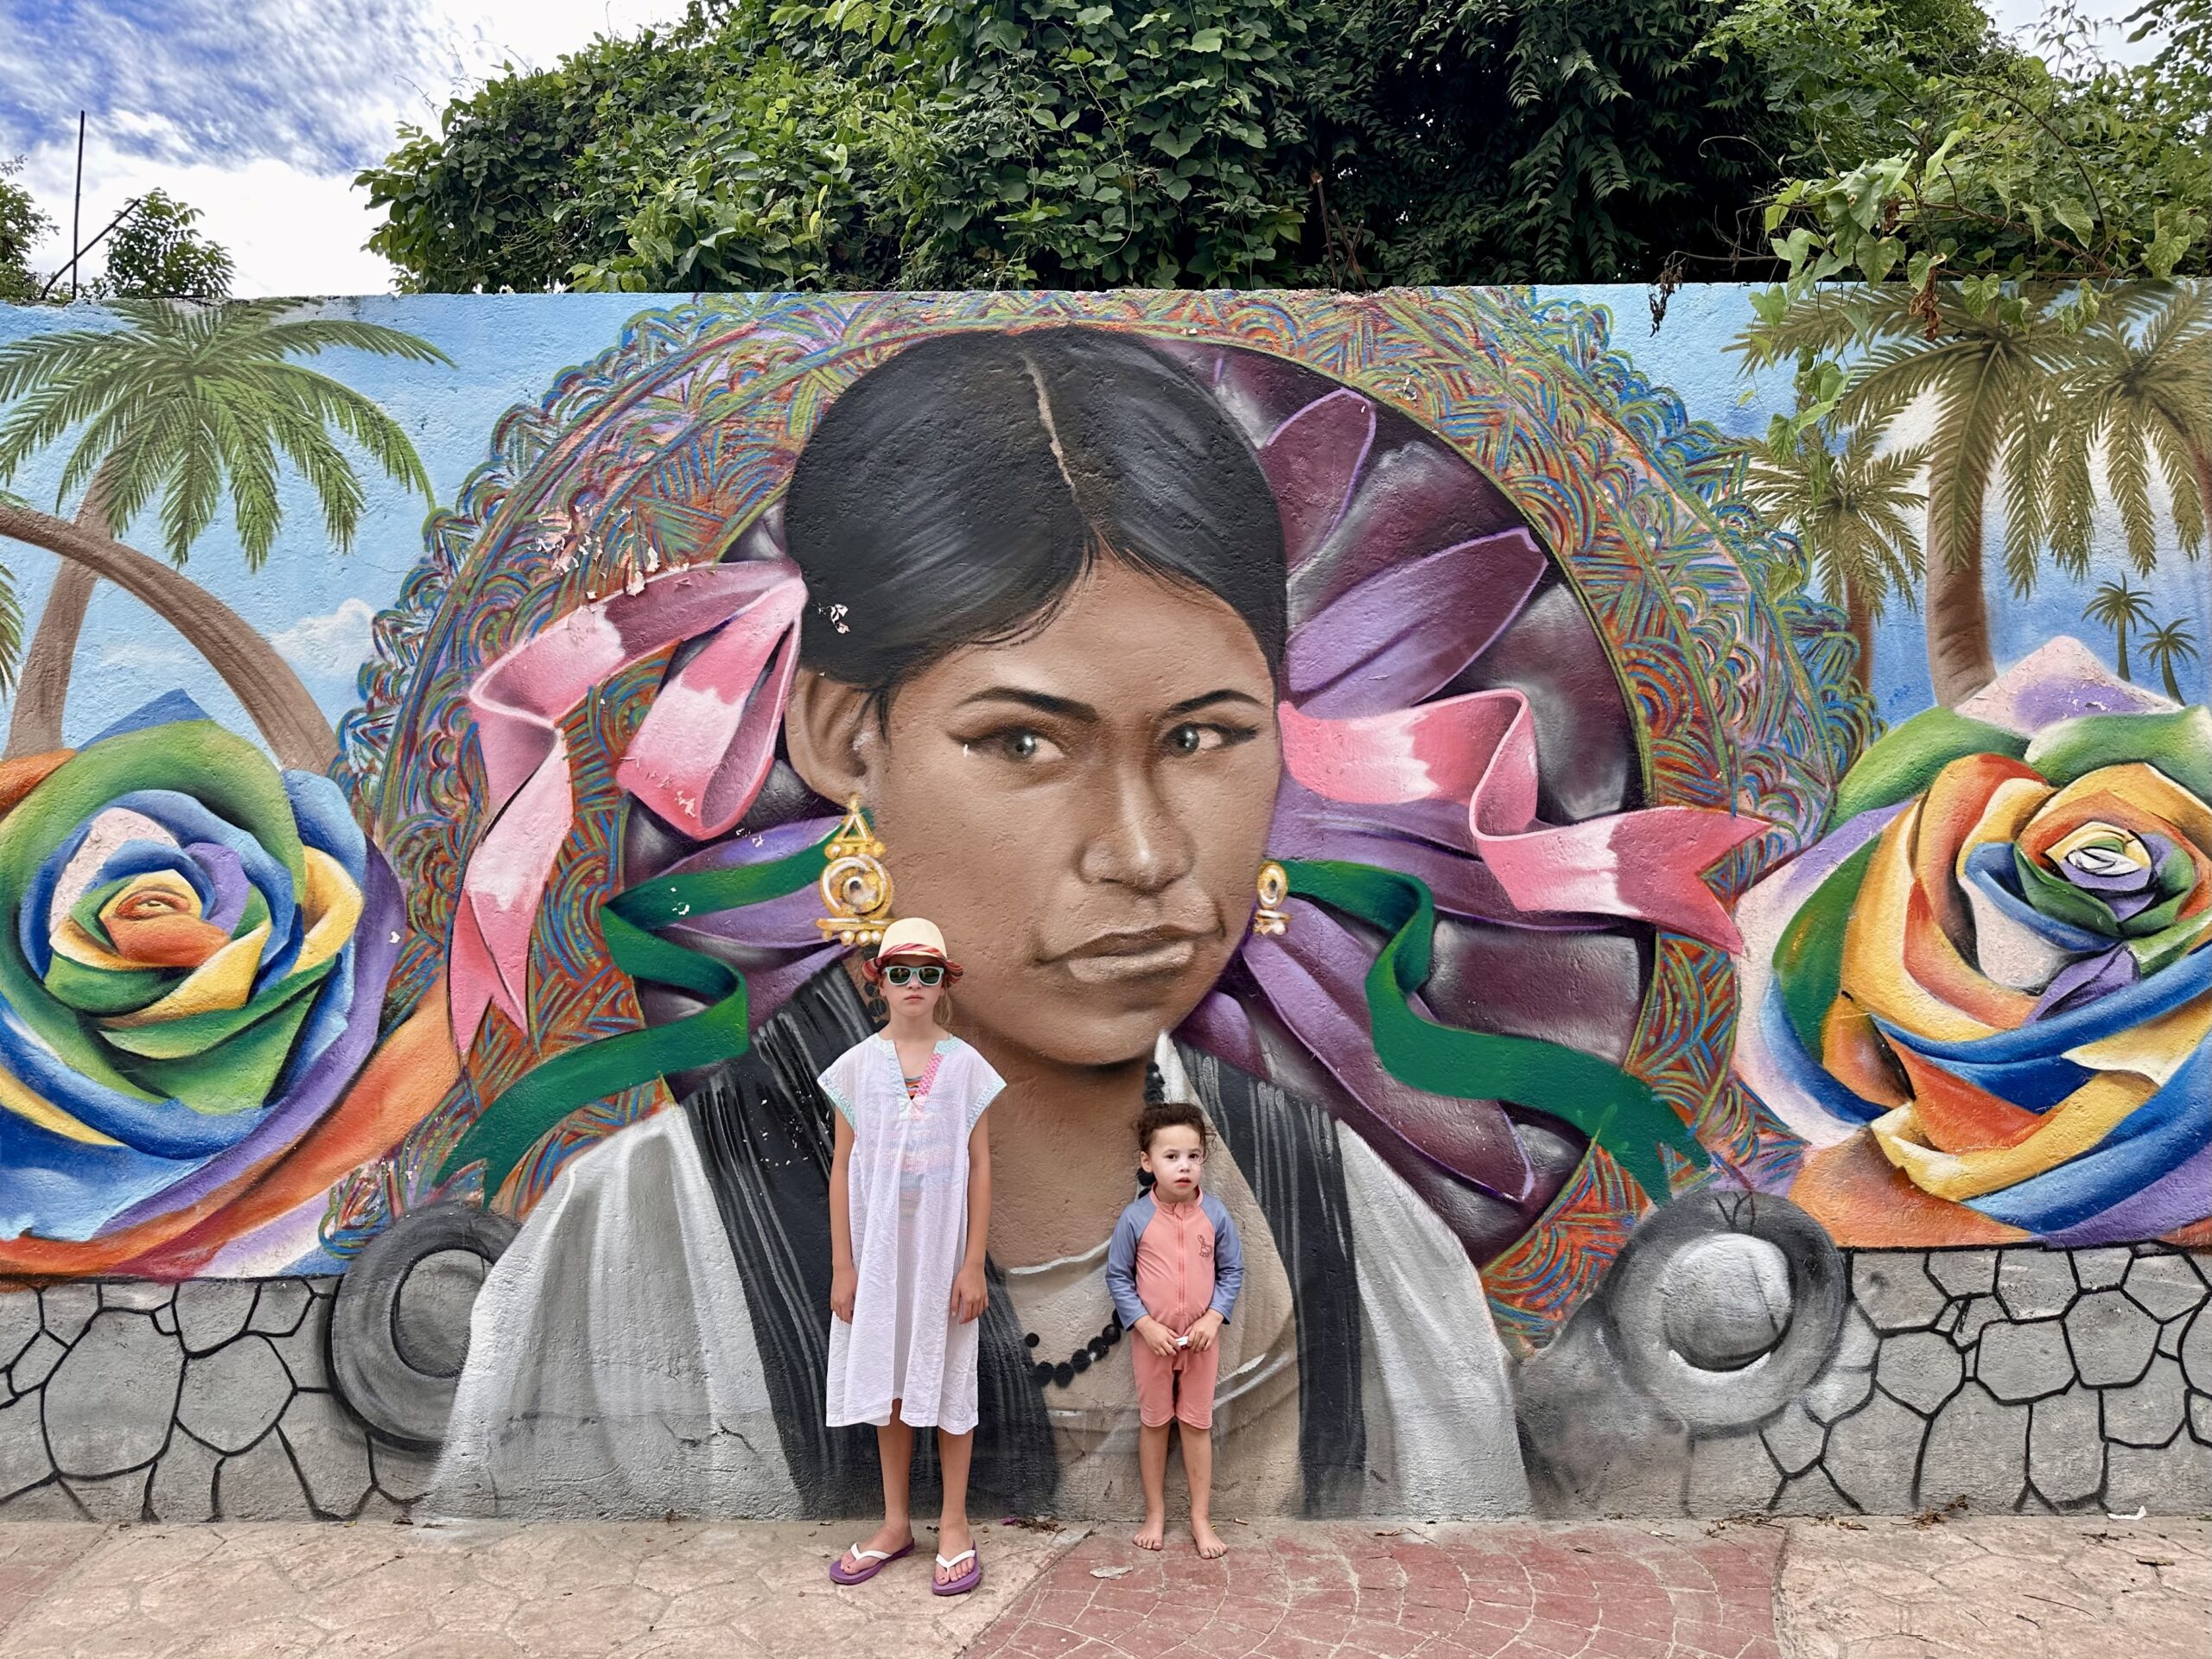 Street art in Zihuatanejo, Mexico